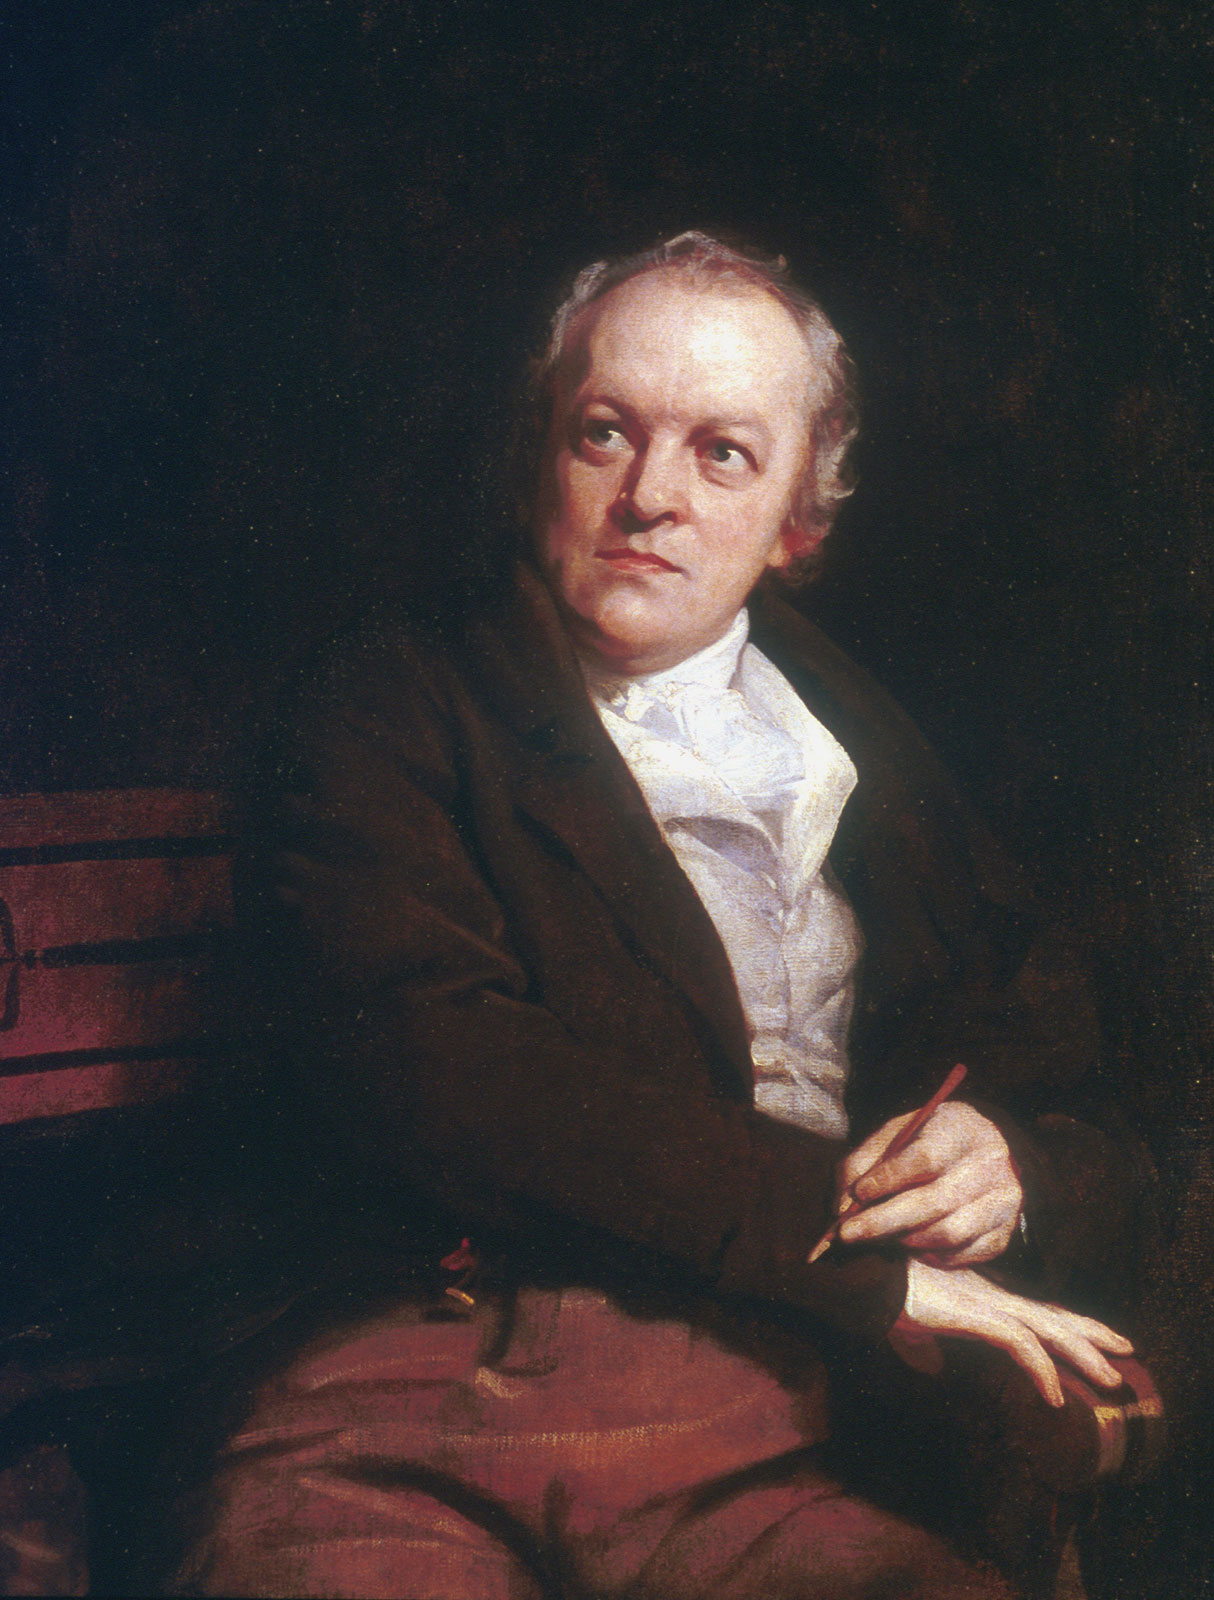 William-Blake-oleo-lienzo-Thomas-Phillips-National-1807